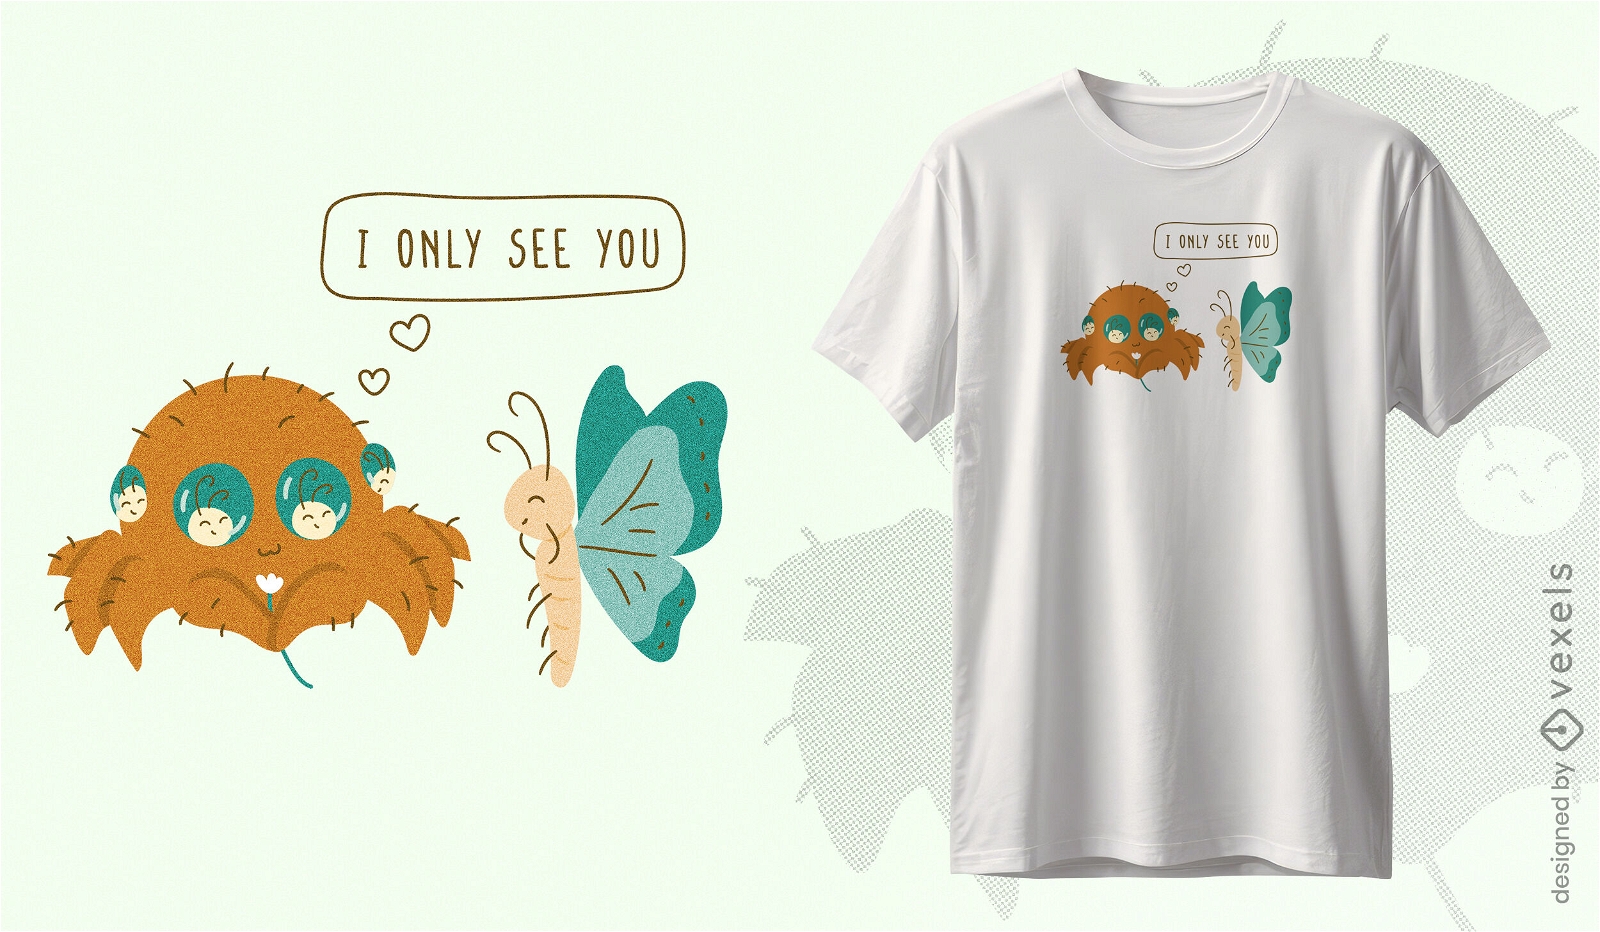 Spinnen- und Schmetterlingsliebes-T-Shirt-Design